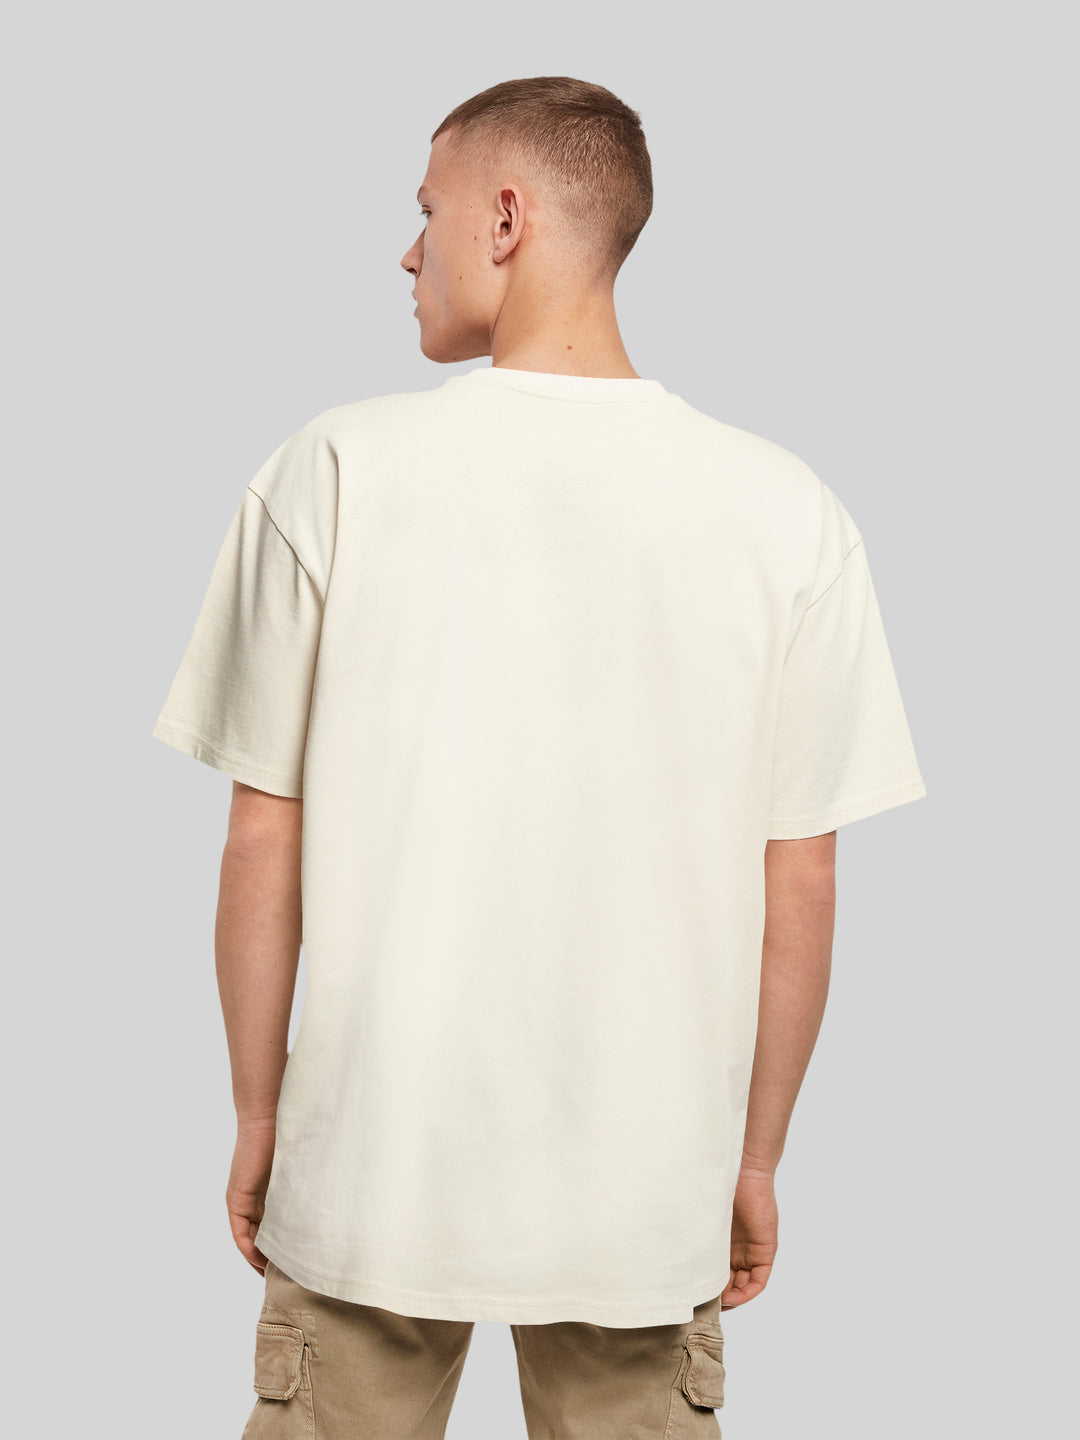 KNUT | Oversize T-Shirt Herren Northern Coast